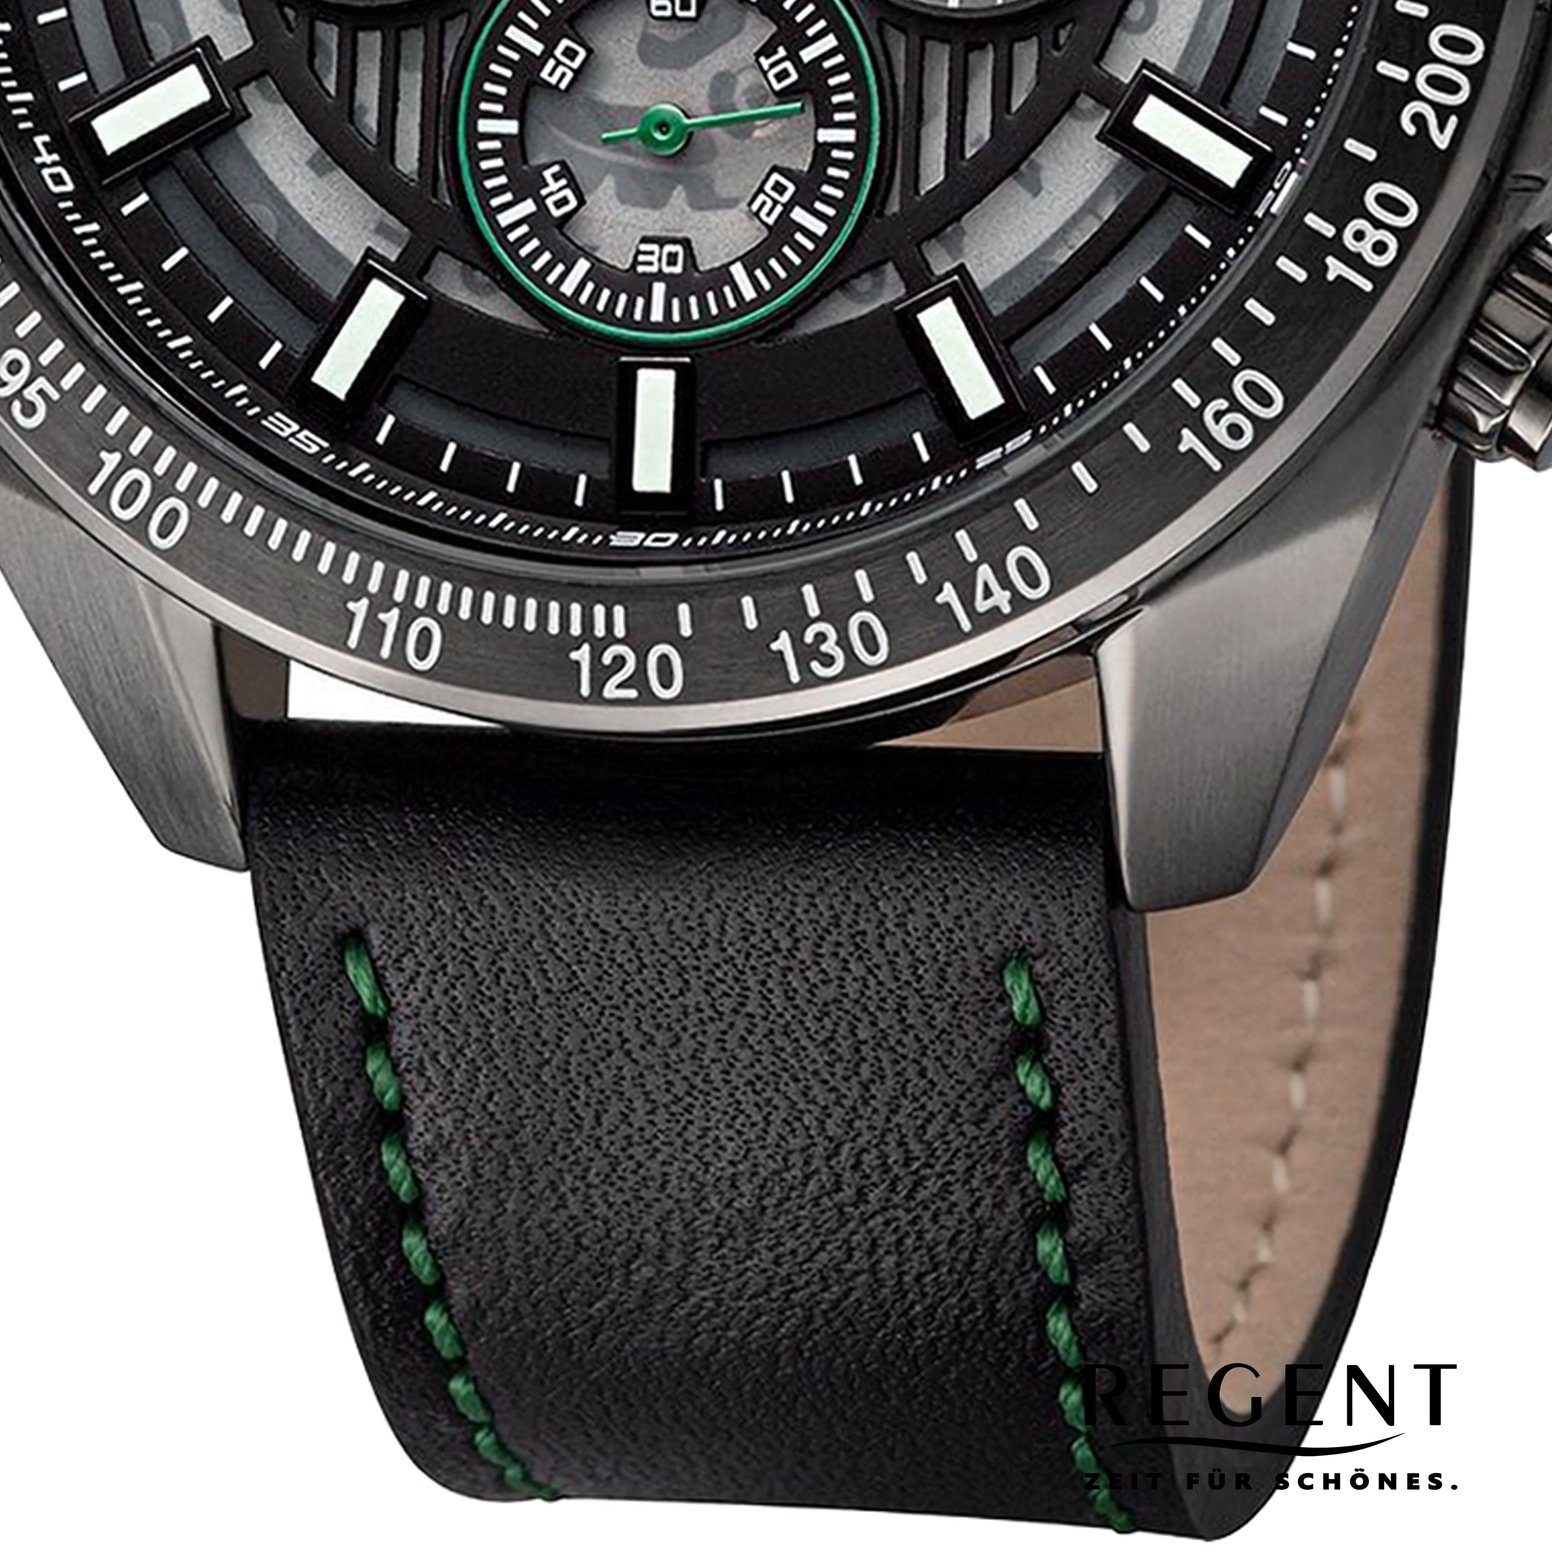 46mm), grün schwarz Regent extra rund, IPB Lederarmband Armbanduhr (ca. Regent Herren Quarzuhr Analog, Herren groß Armbanduhr